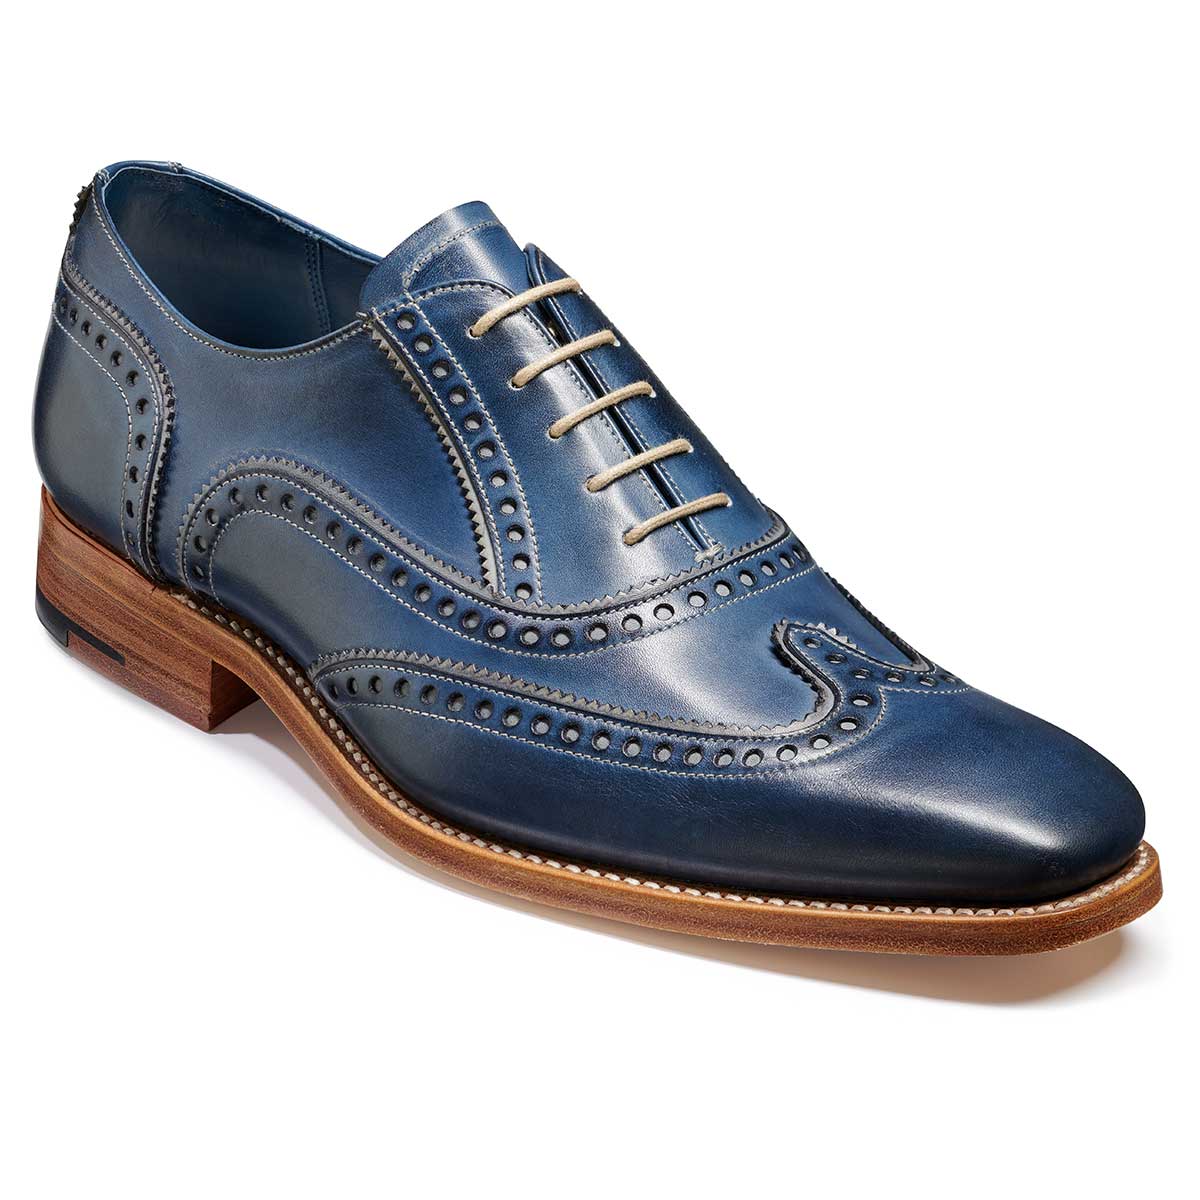 BARKER Spencer Shoes - Mens Brogue - Navy & Grey Handpainted